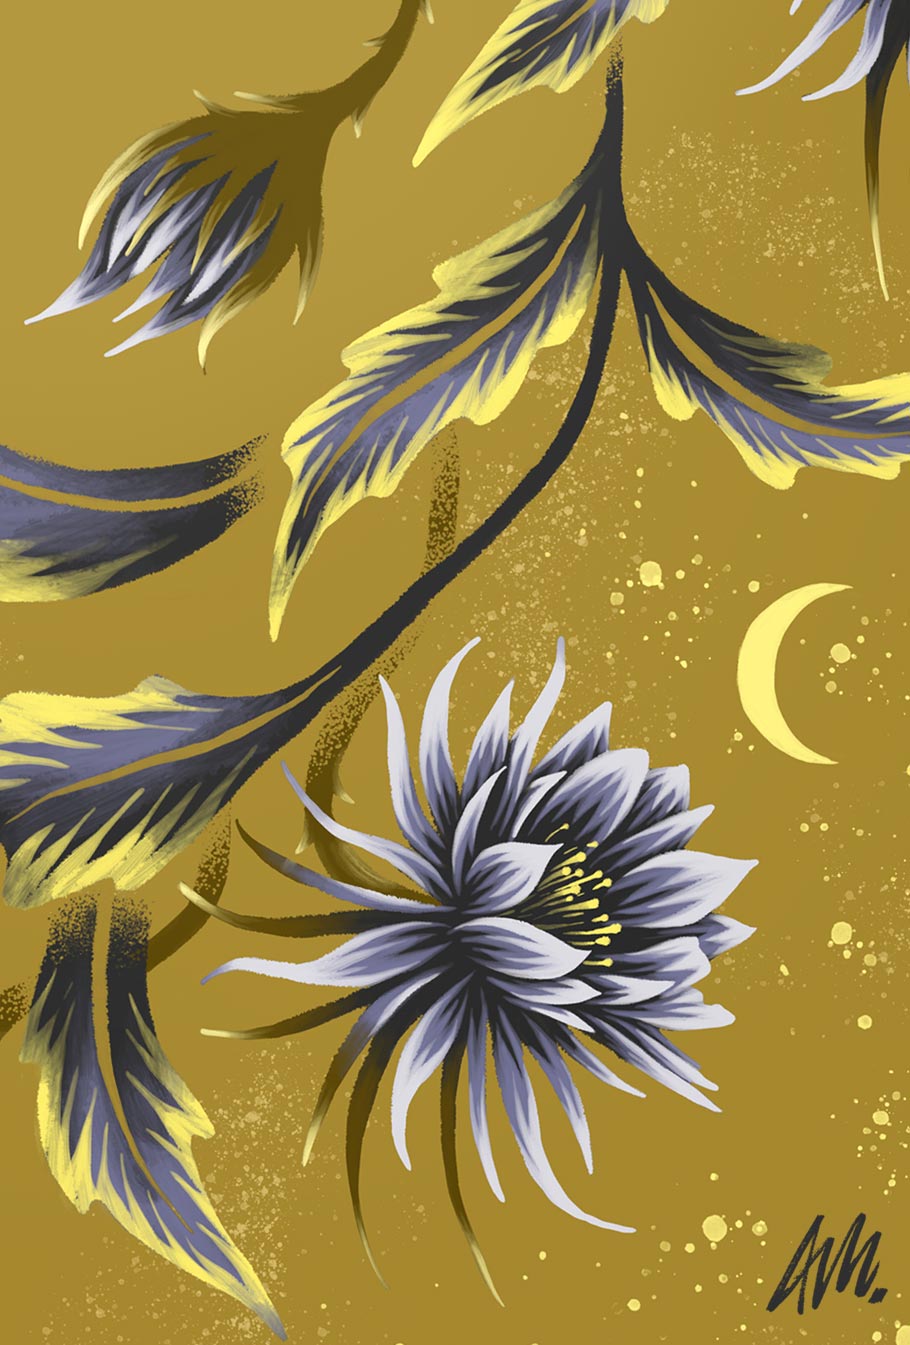 Detail of floral illustration by Andrea Muller